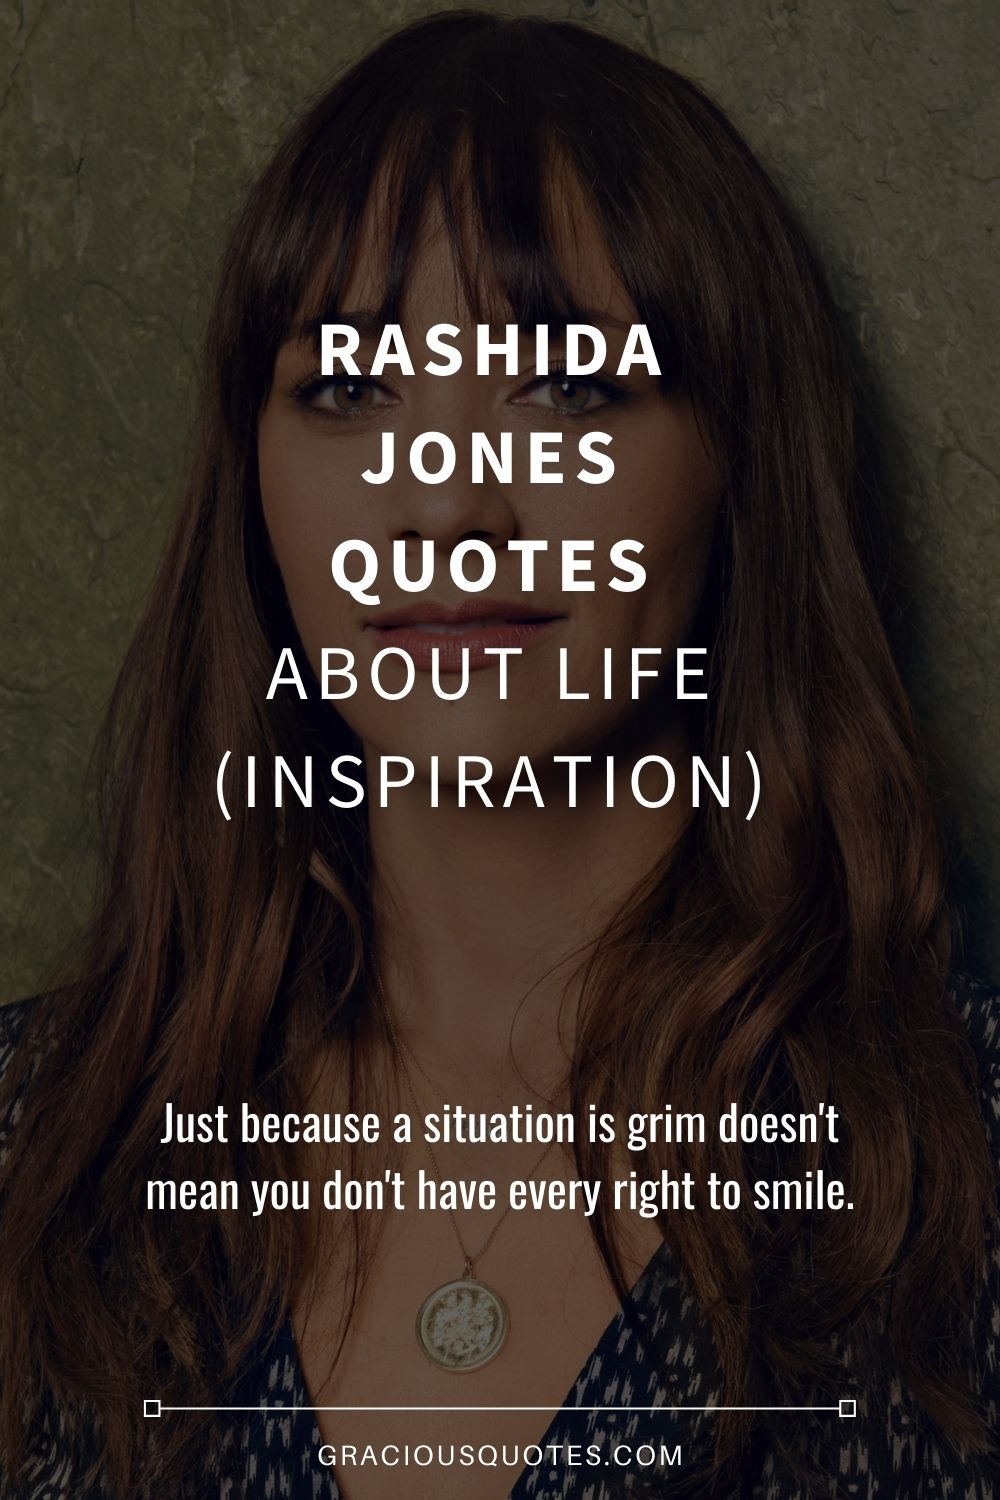 Rashida Jones Quotes About Life (INSPIRATION) - Gracious Quotes